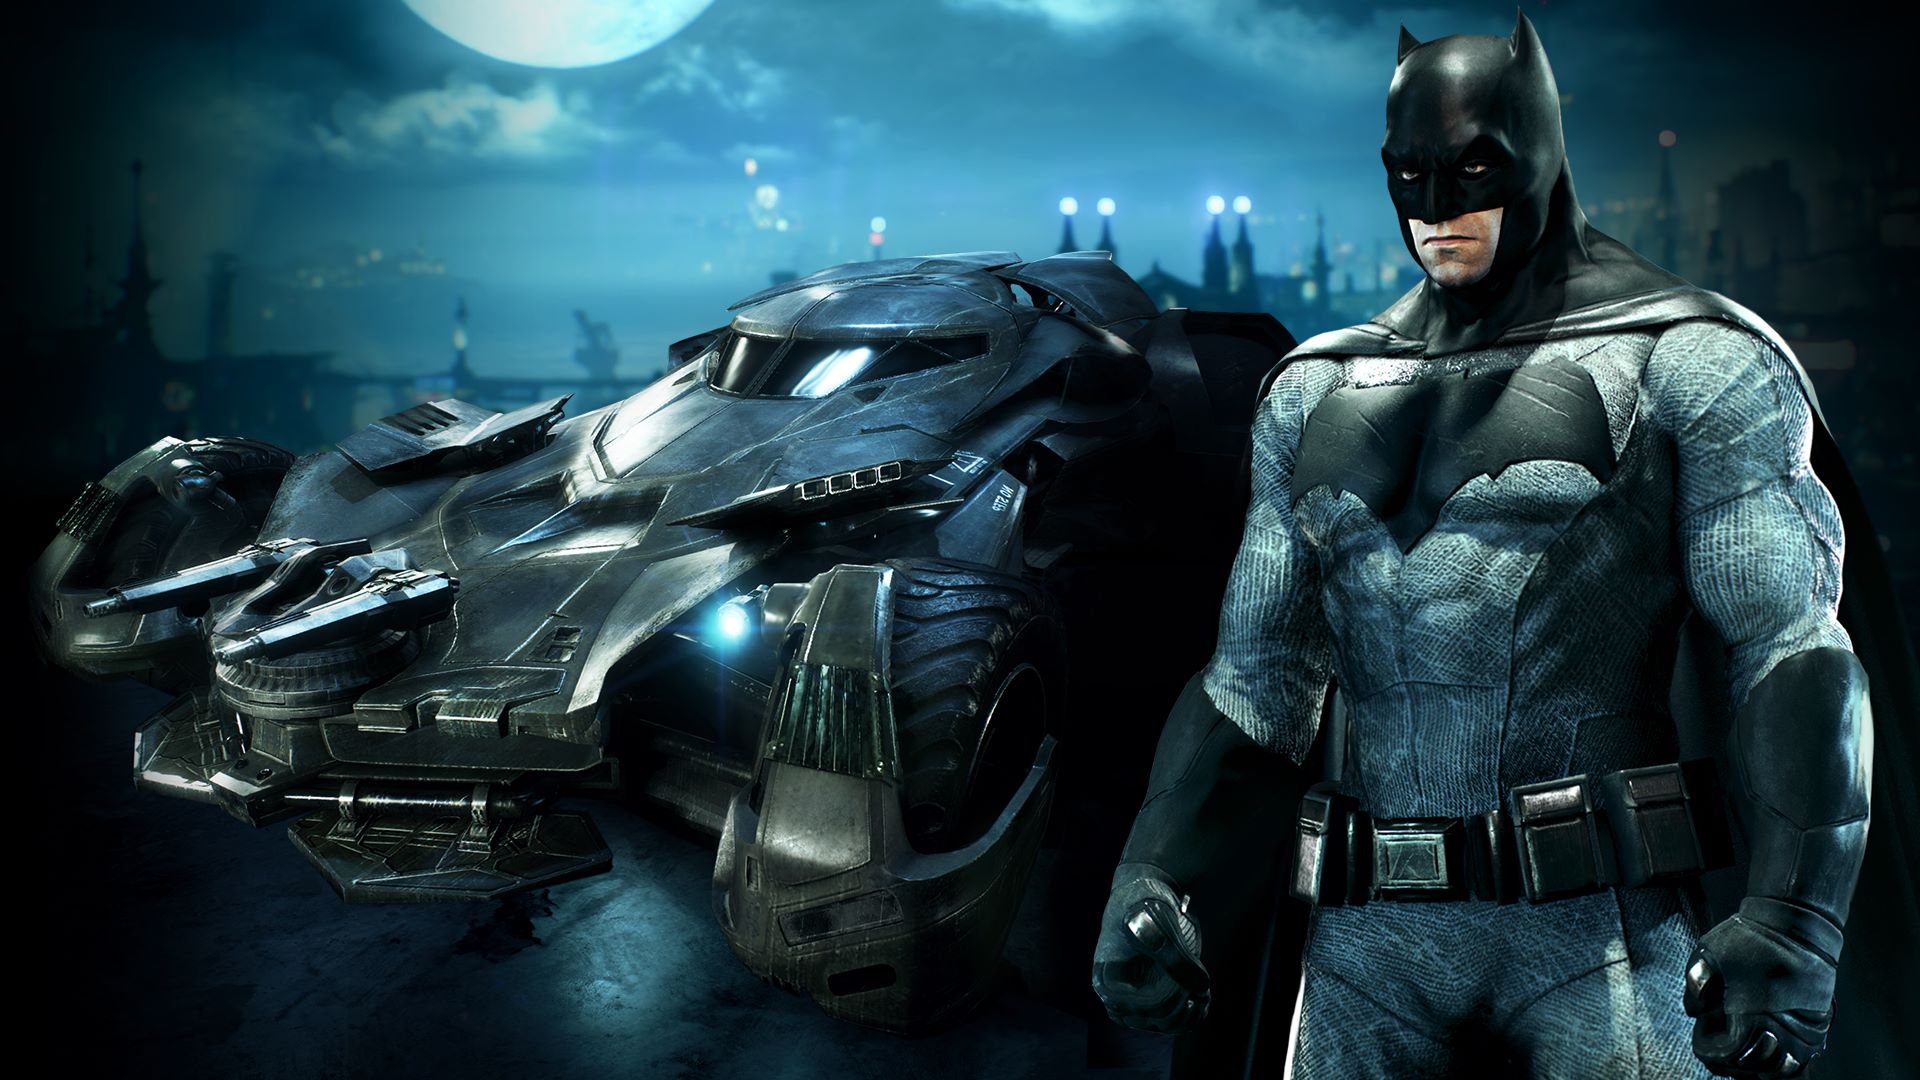 Download Game Superman Vs Batman